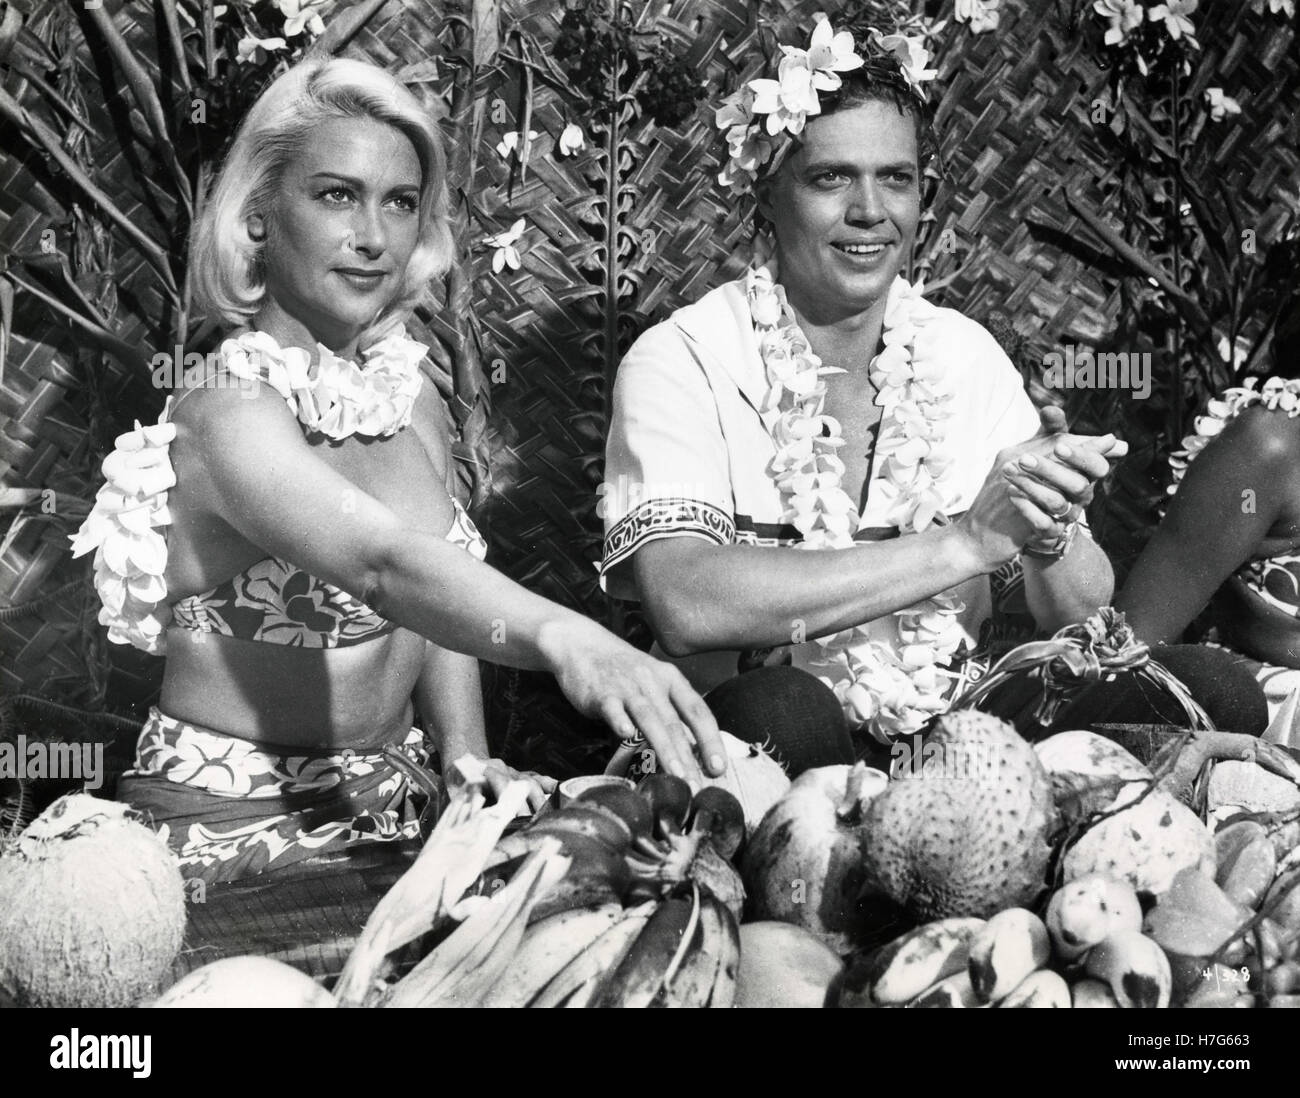 Actors Martine Carol and Karlheinz Bohm in the movie Nachte auf Tahiti, Germany 1957 Stock Photo